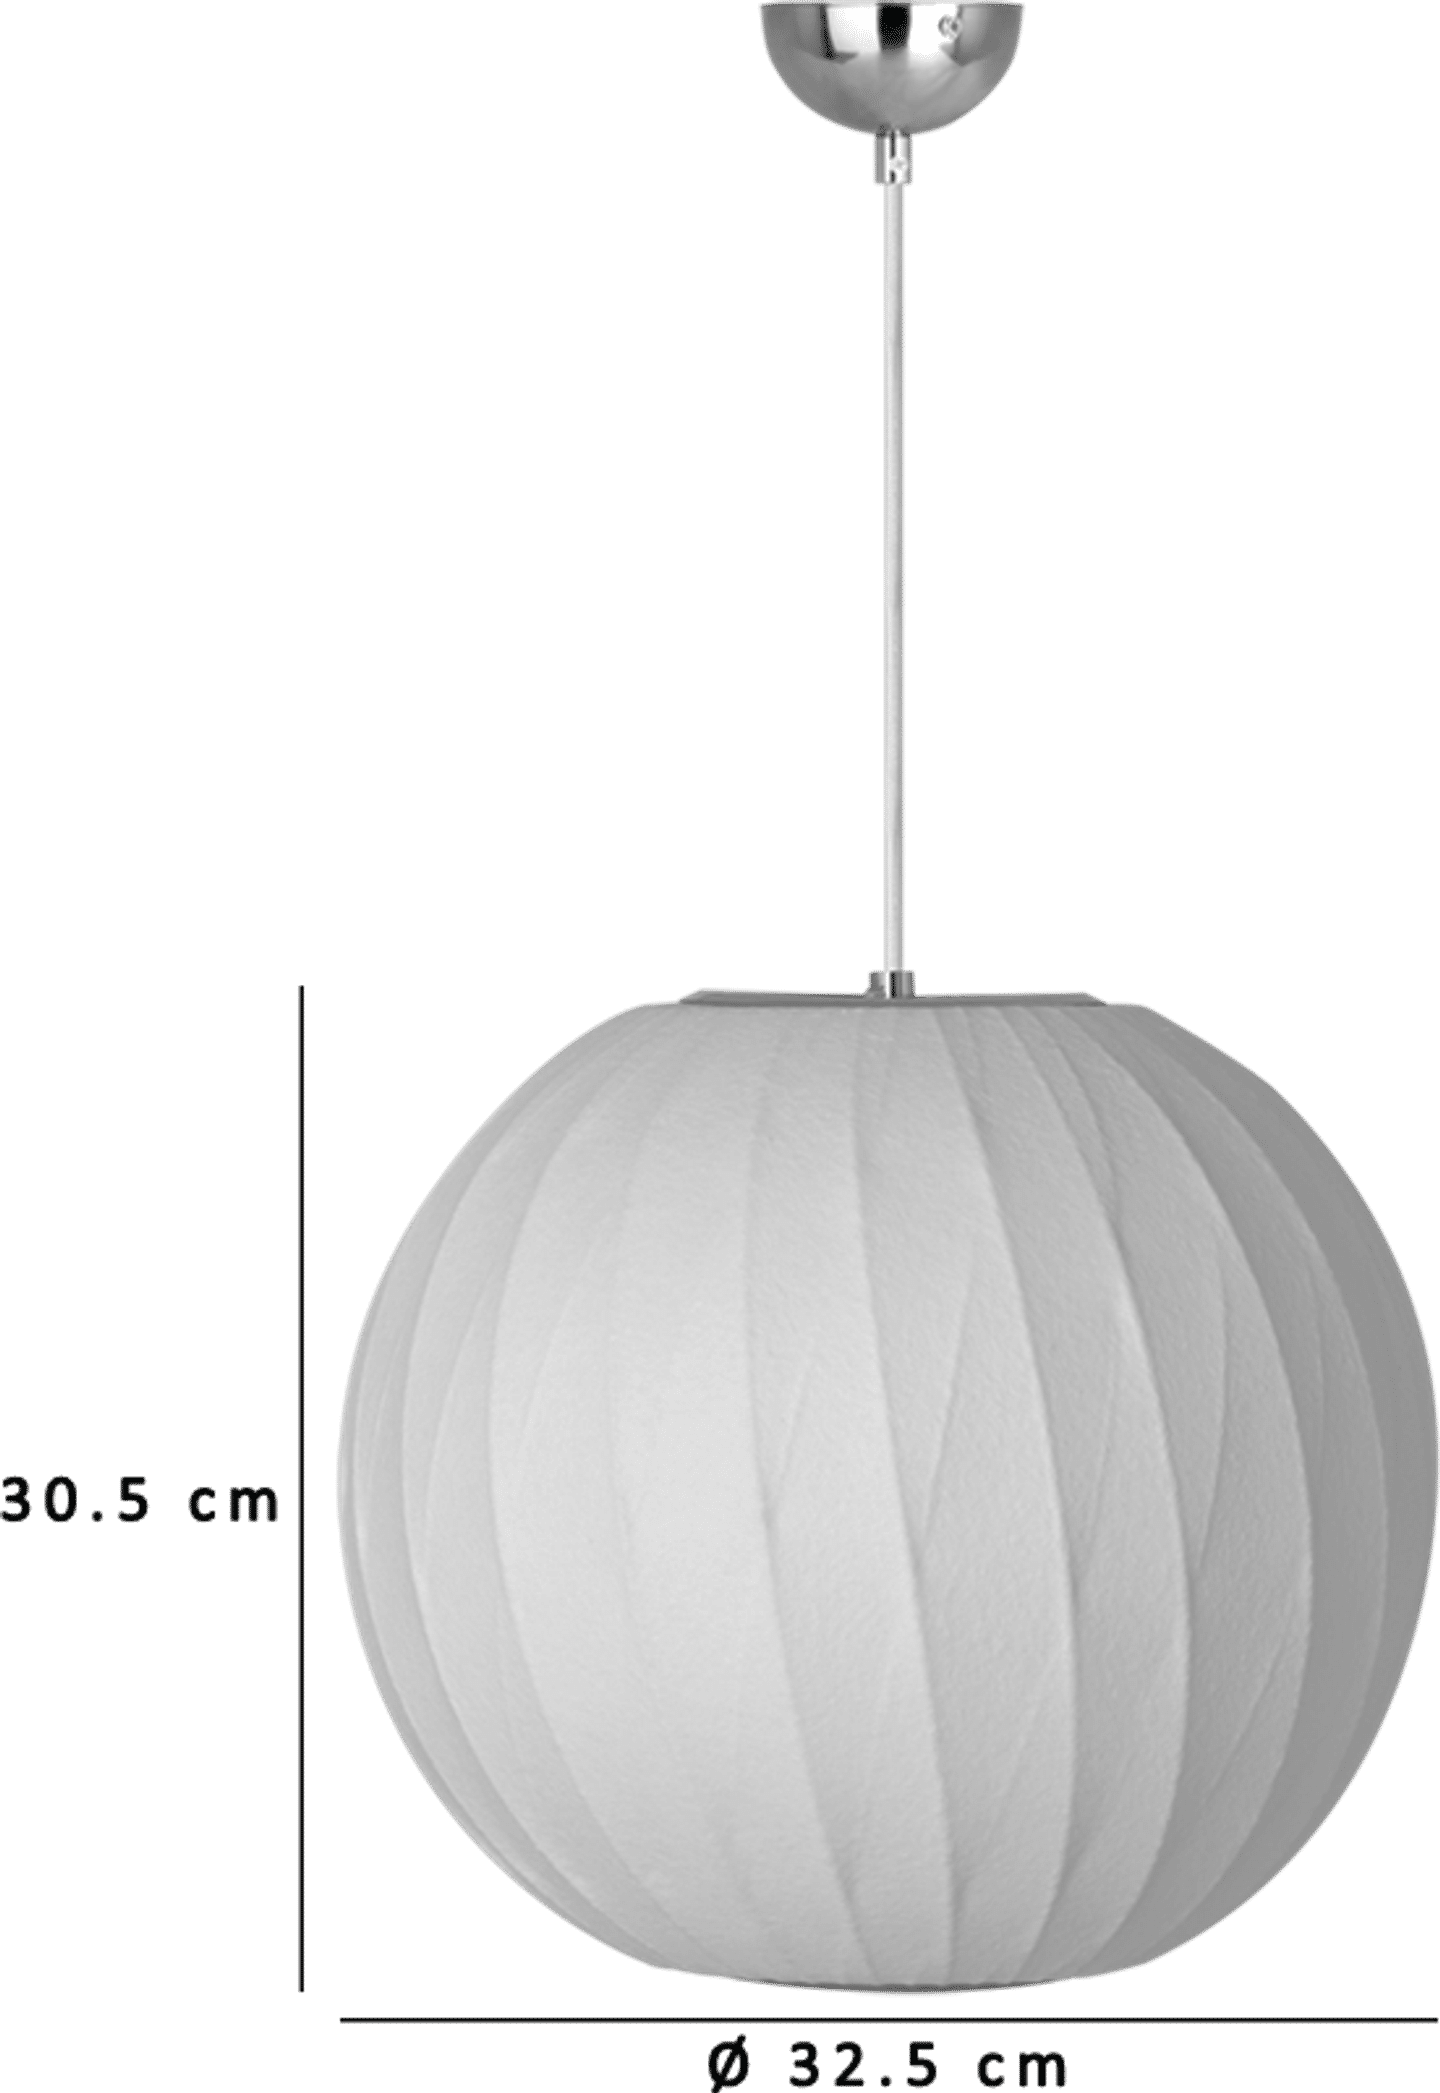 Boble lampe krysskryss ball Small image.